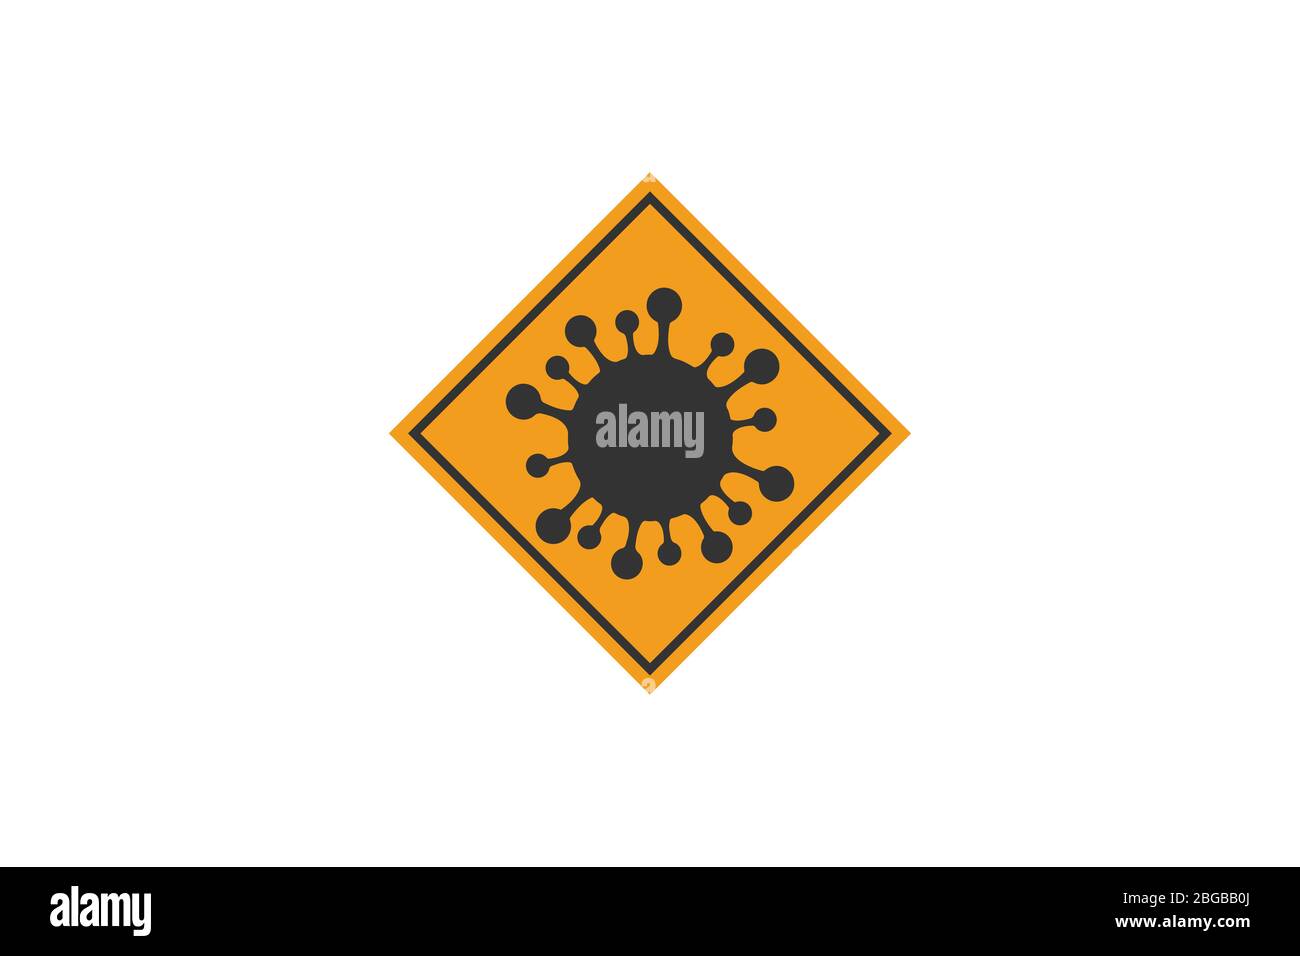 Coronavirus sign. Corona virus Bacteria Cell Icon, 2019-nCoV in caution traffic signs. Warning symbol of COVID-19, Novel coronavirus. Vector icon. Stock Vector